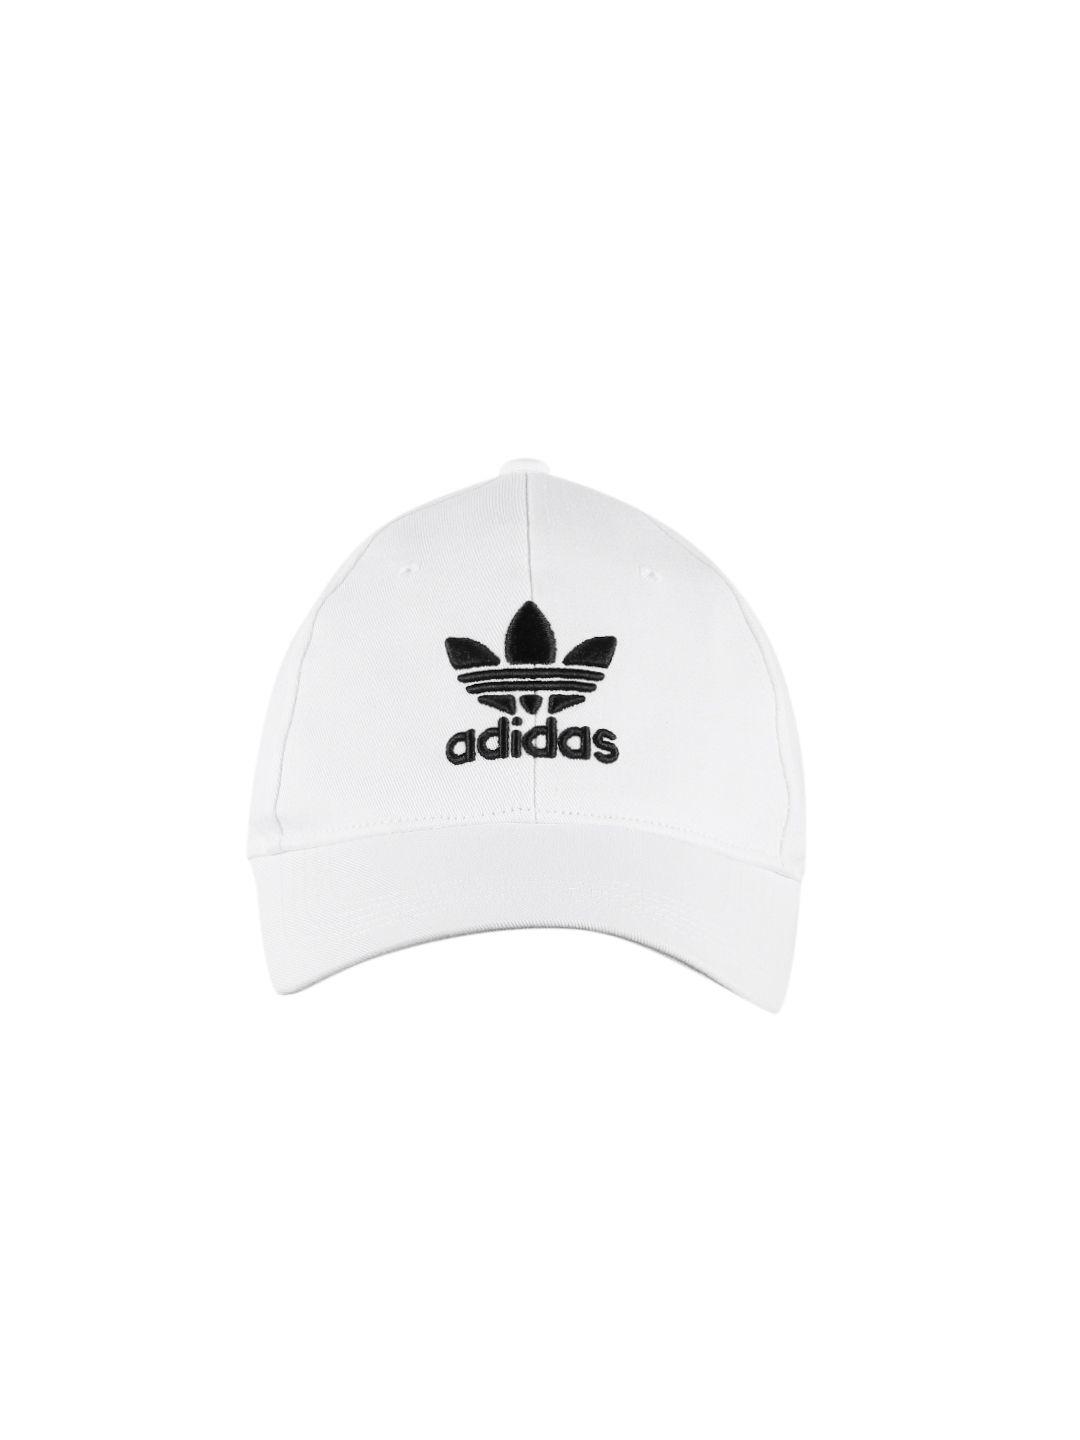 adidas originals unisex cotton brand logo embroidered trefoil baseball cap